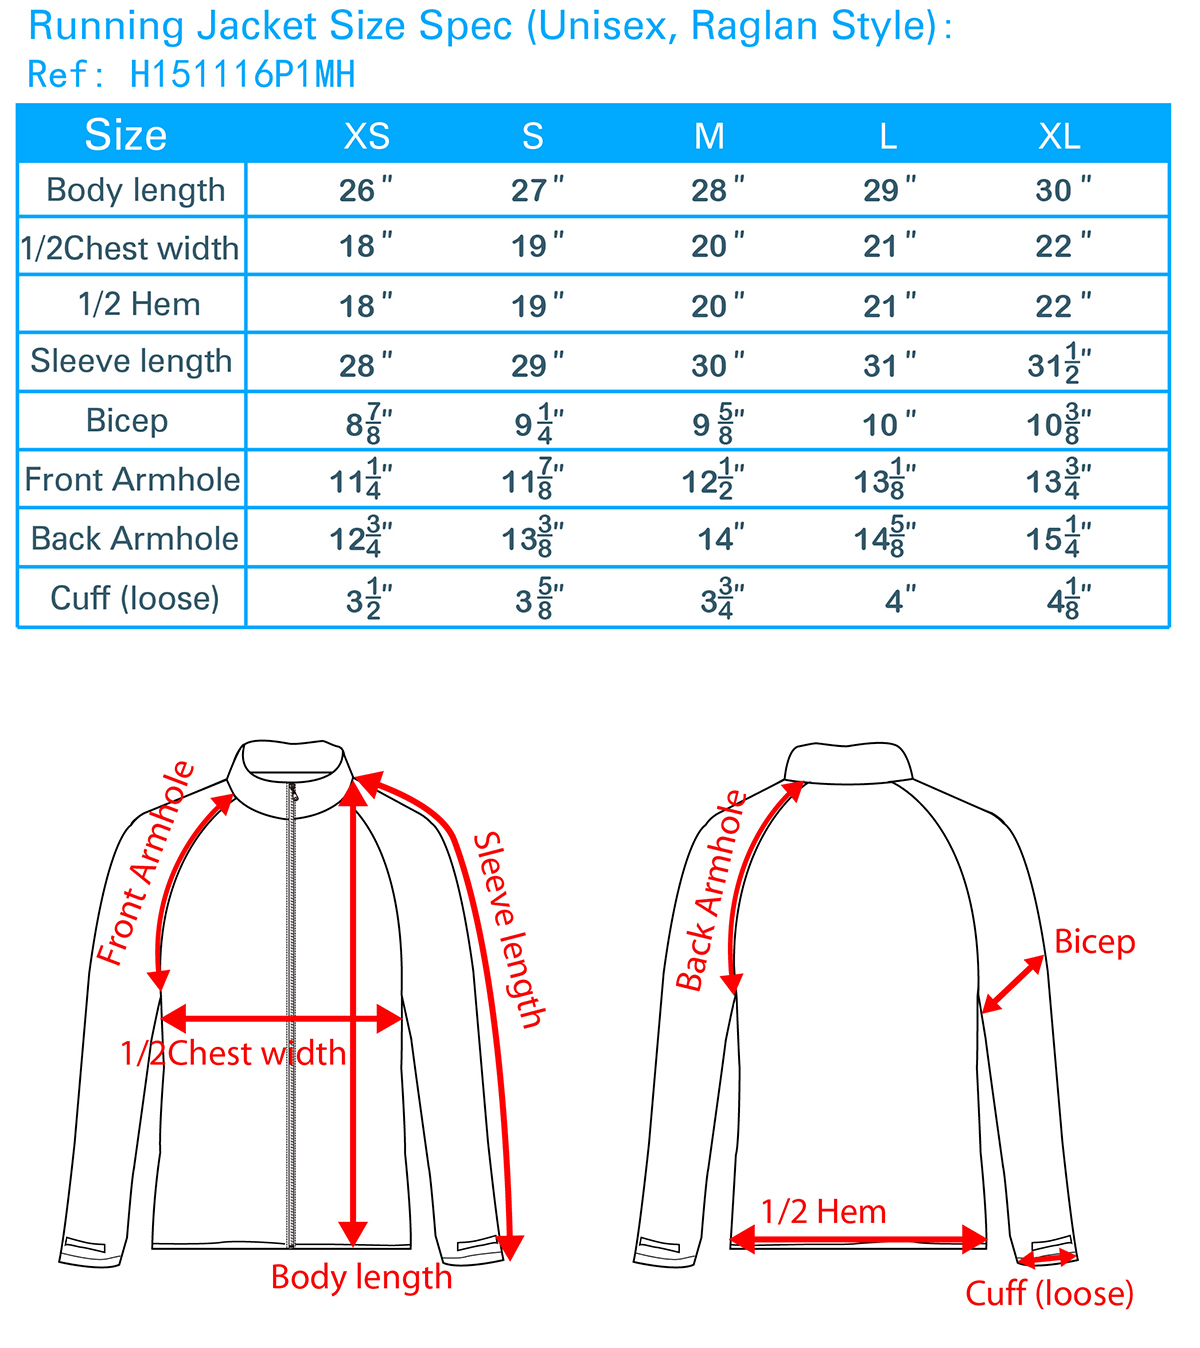 Running Jacket Size Spec(Unisex,Raglan Style)